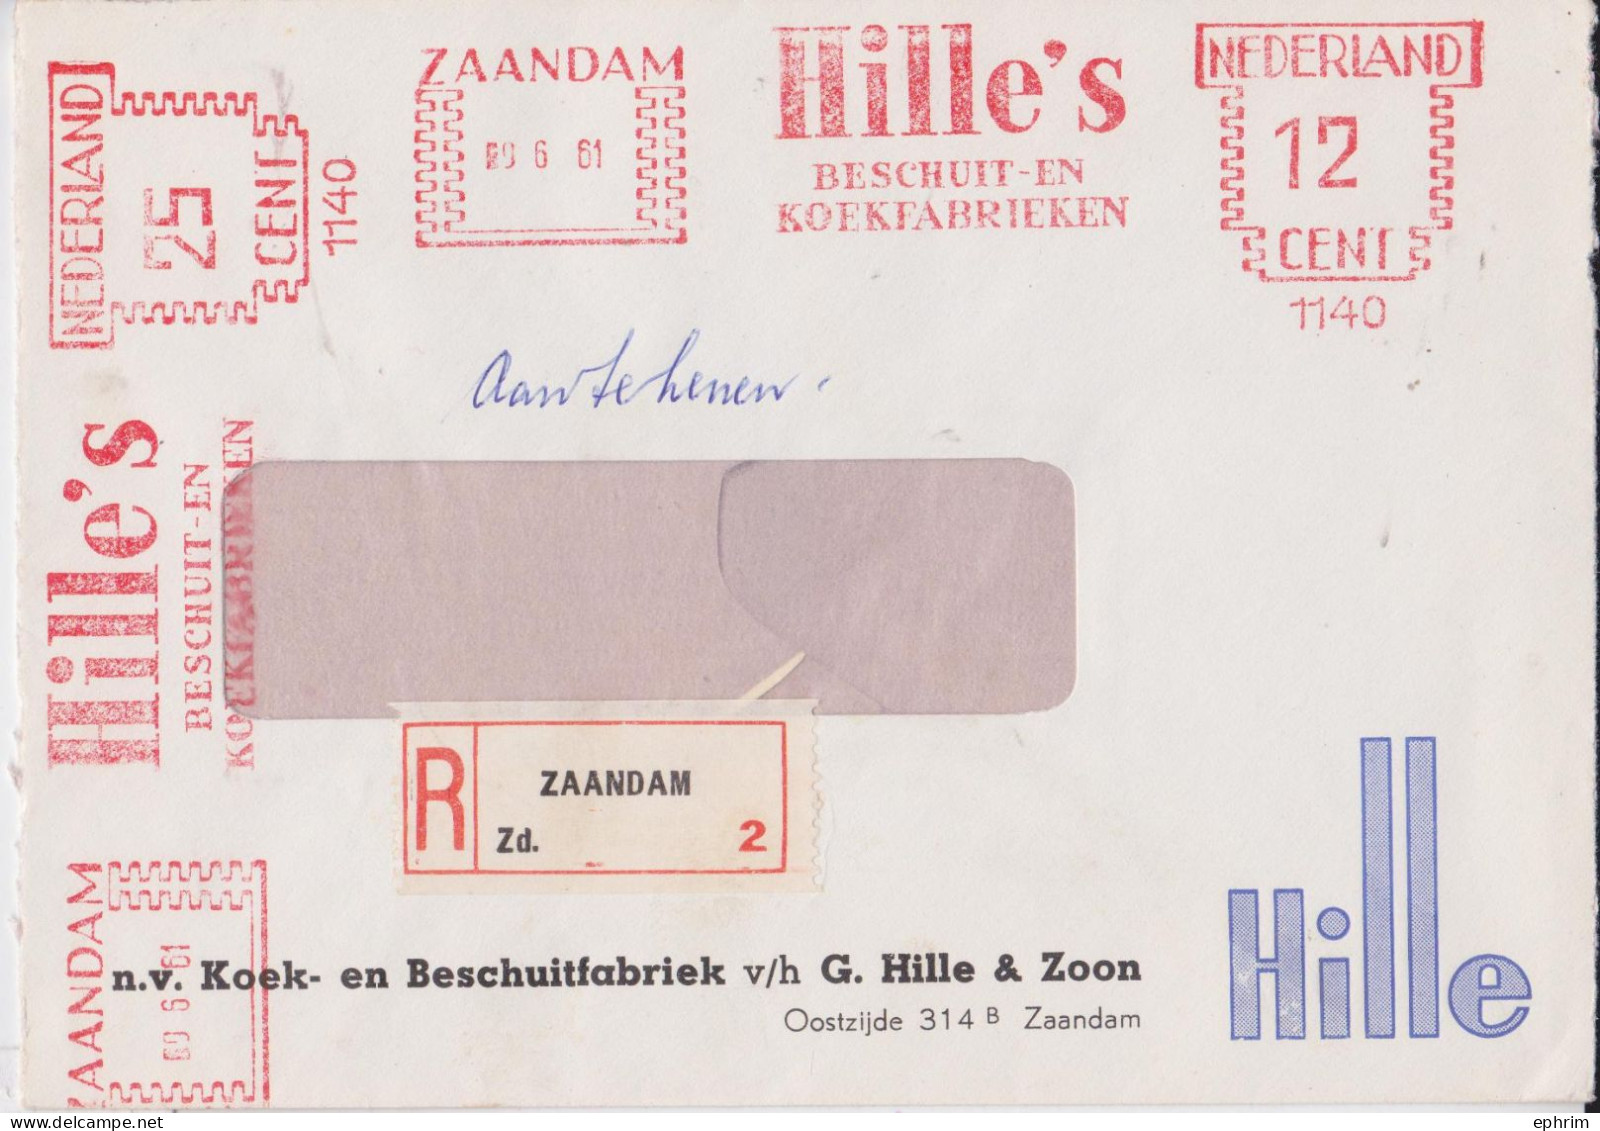 Zaandam Hille's Nederland Ema Red Meter Machine Mail Stampless Registered Cover Lettre Affranchissement Mécanique 1961 - Franking Machines (EMA)